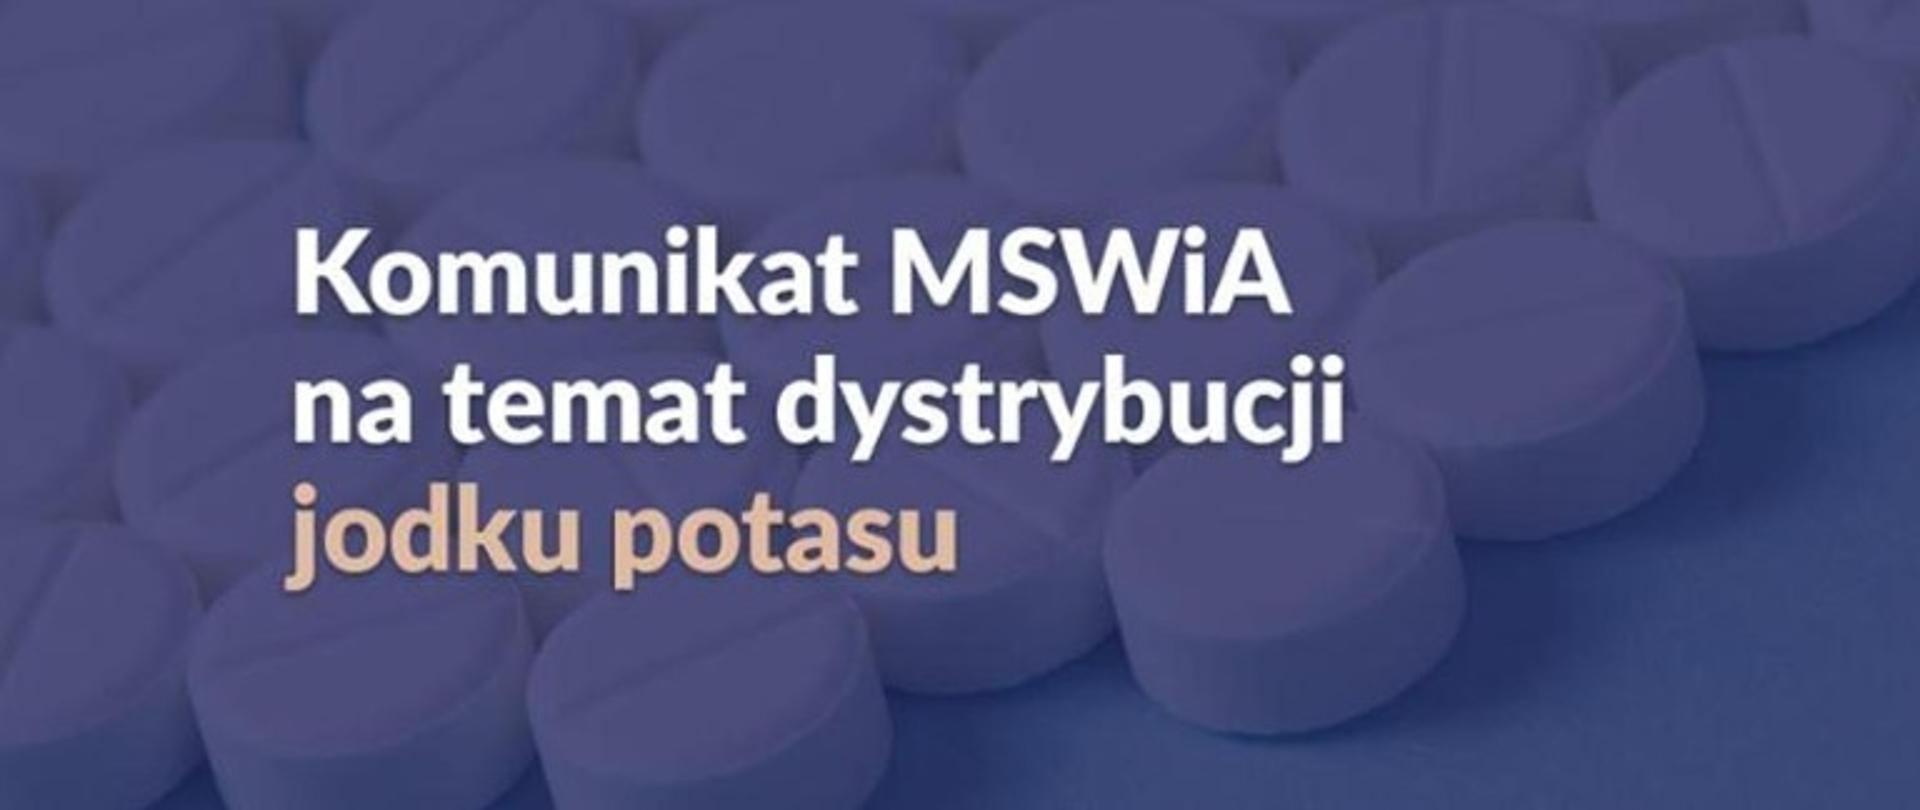 Napis o treści "Komunikat MSWiA na temat dystrybucji jodku potasu" na tle tabletek